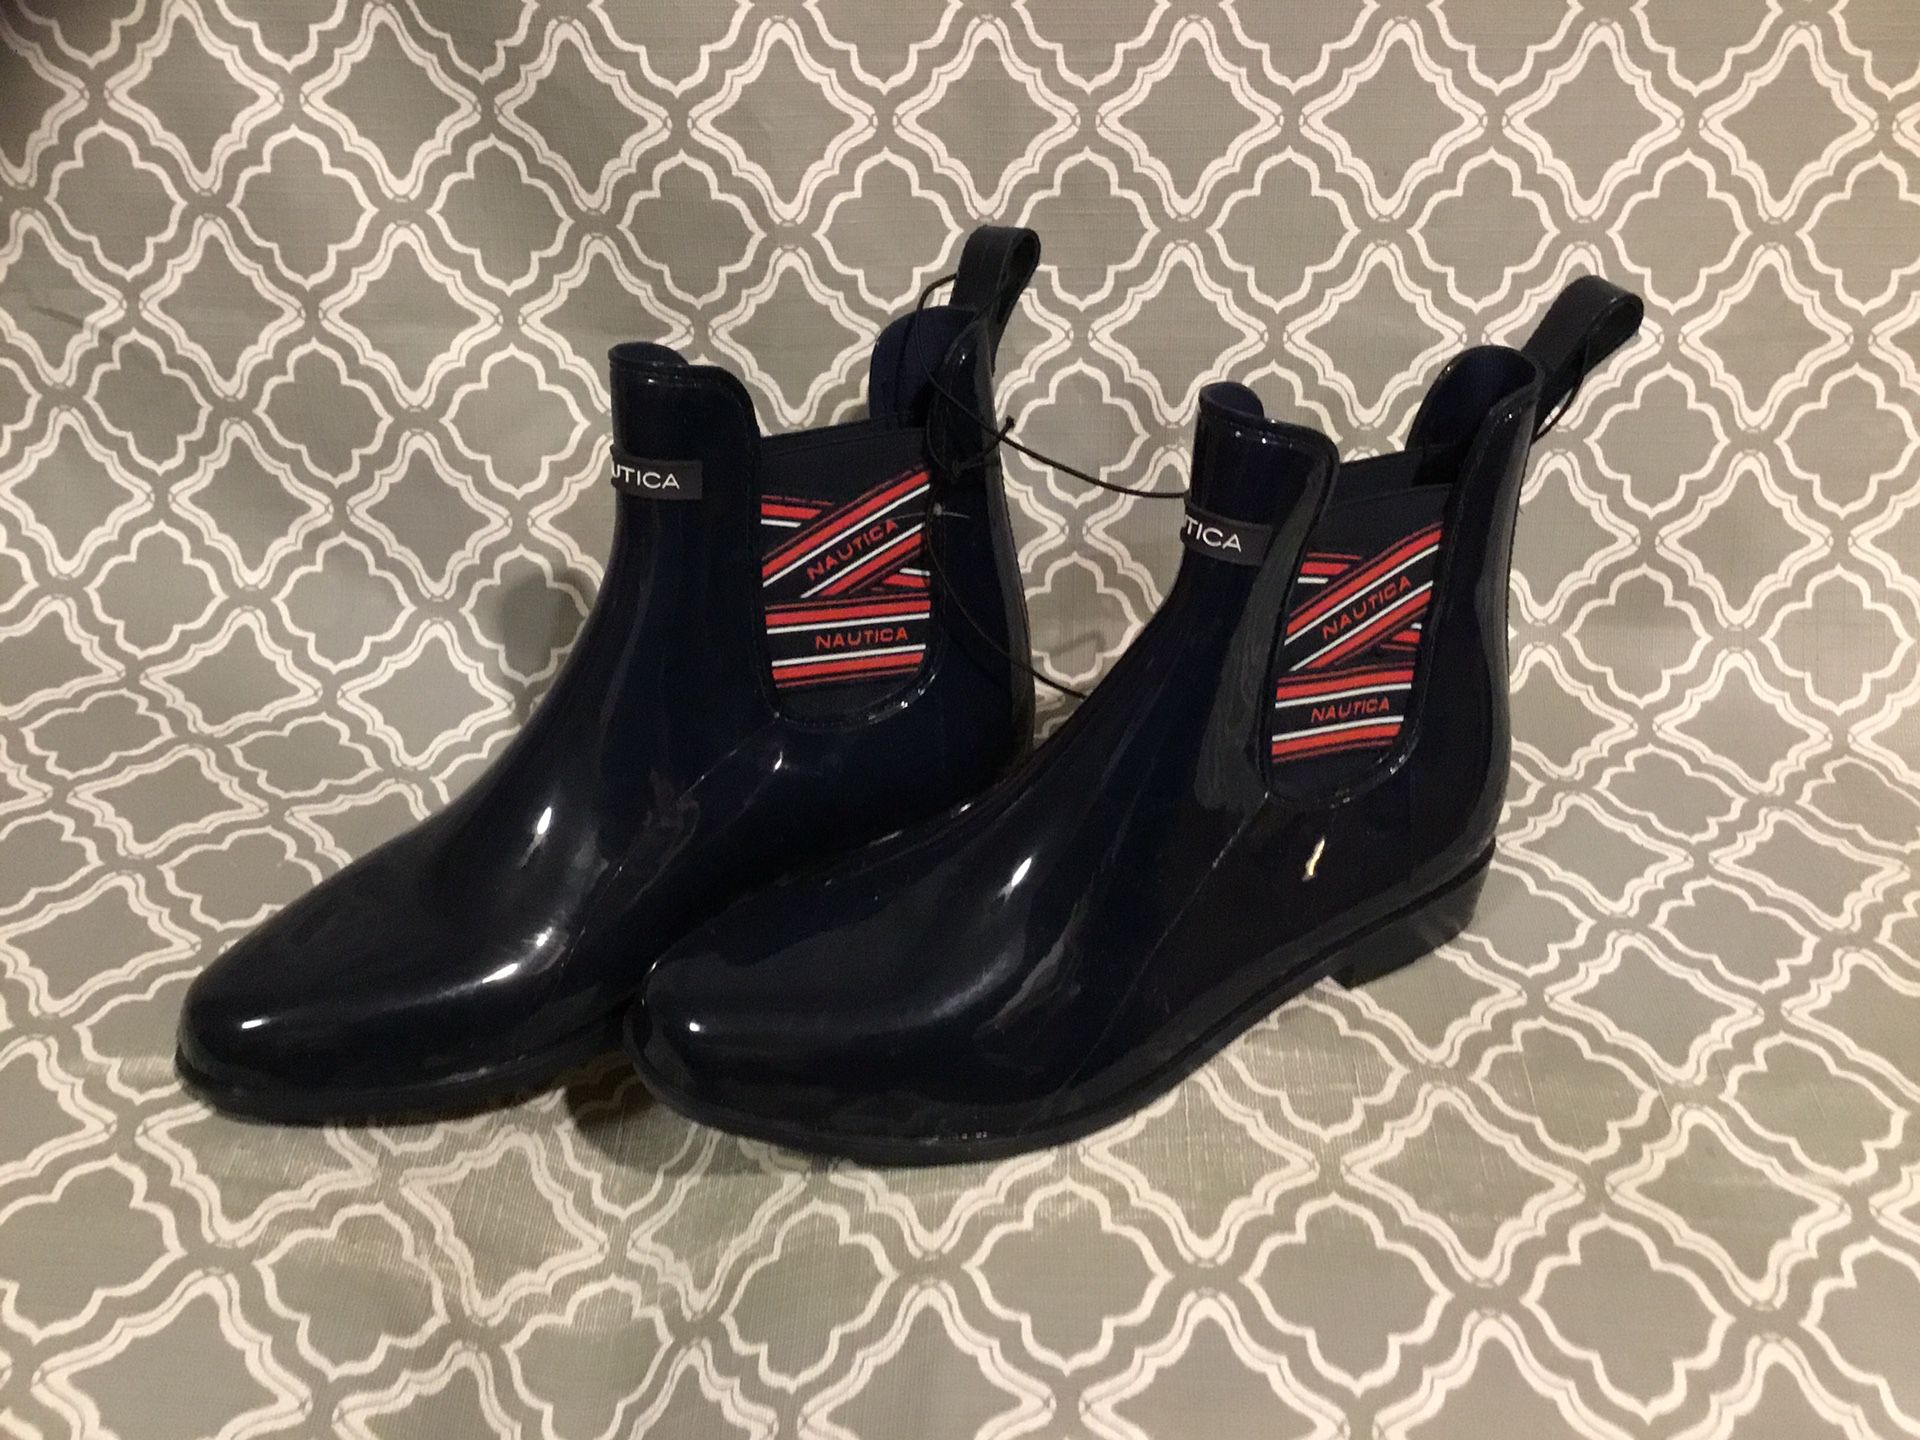 Nautical rain boots